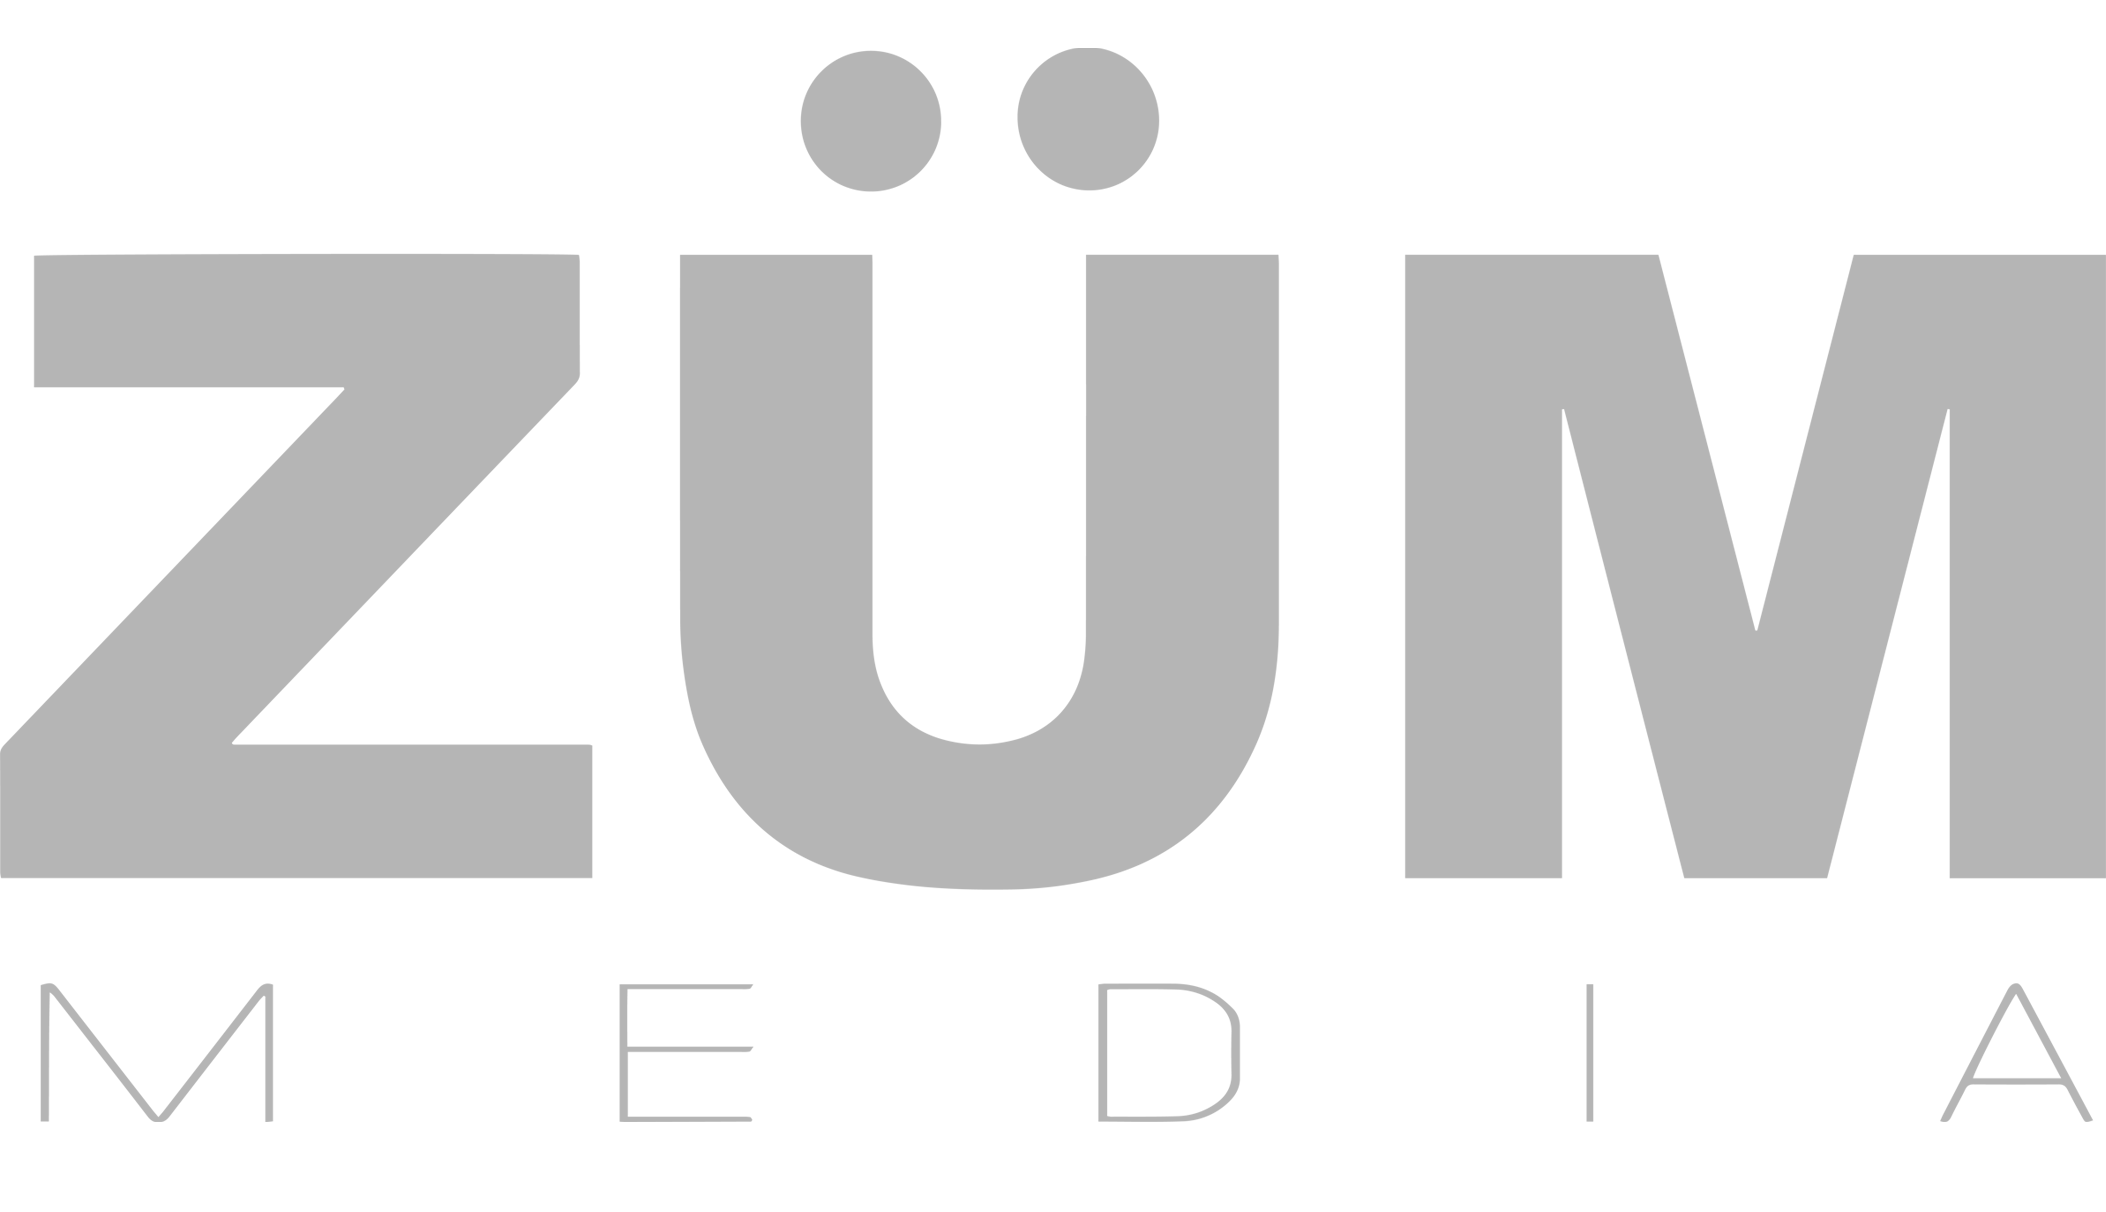 ZÜM Media